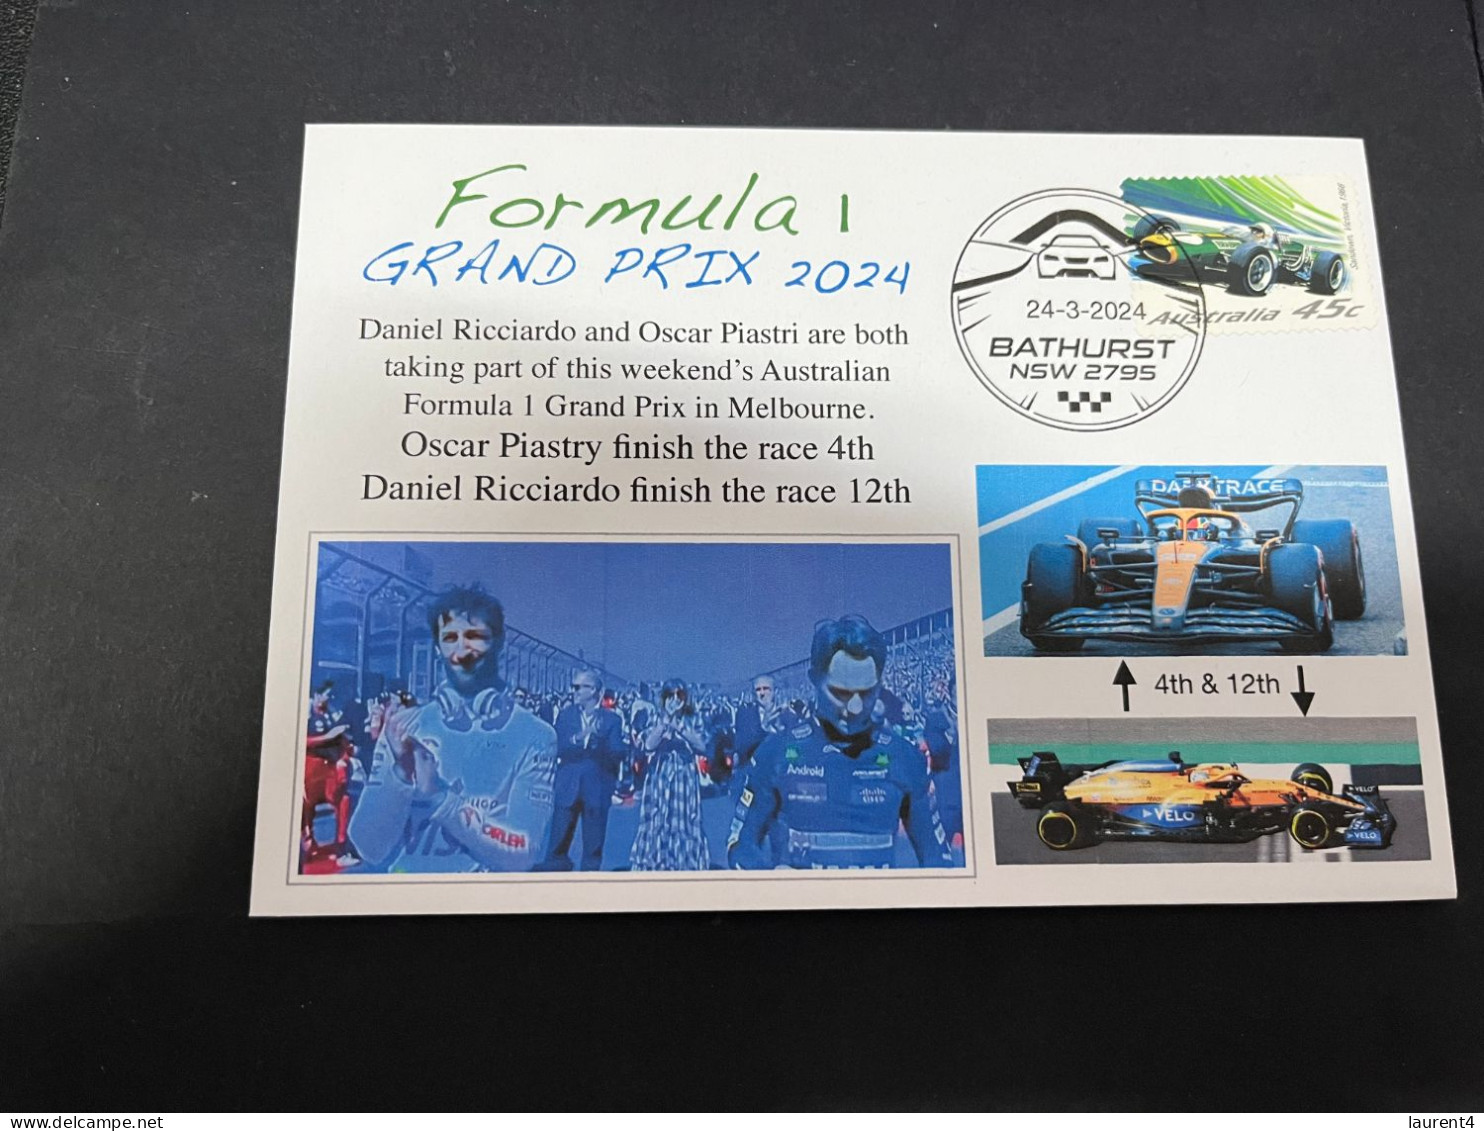 25-3-2024 (4 Y 2)  2024 Australia Grand Prix - Formula 1 Stamp - Oscar Piastry (4th) & Daniel Ricciardo (12th) Finish - Automovilismo